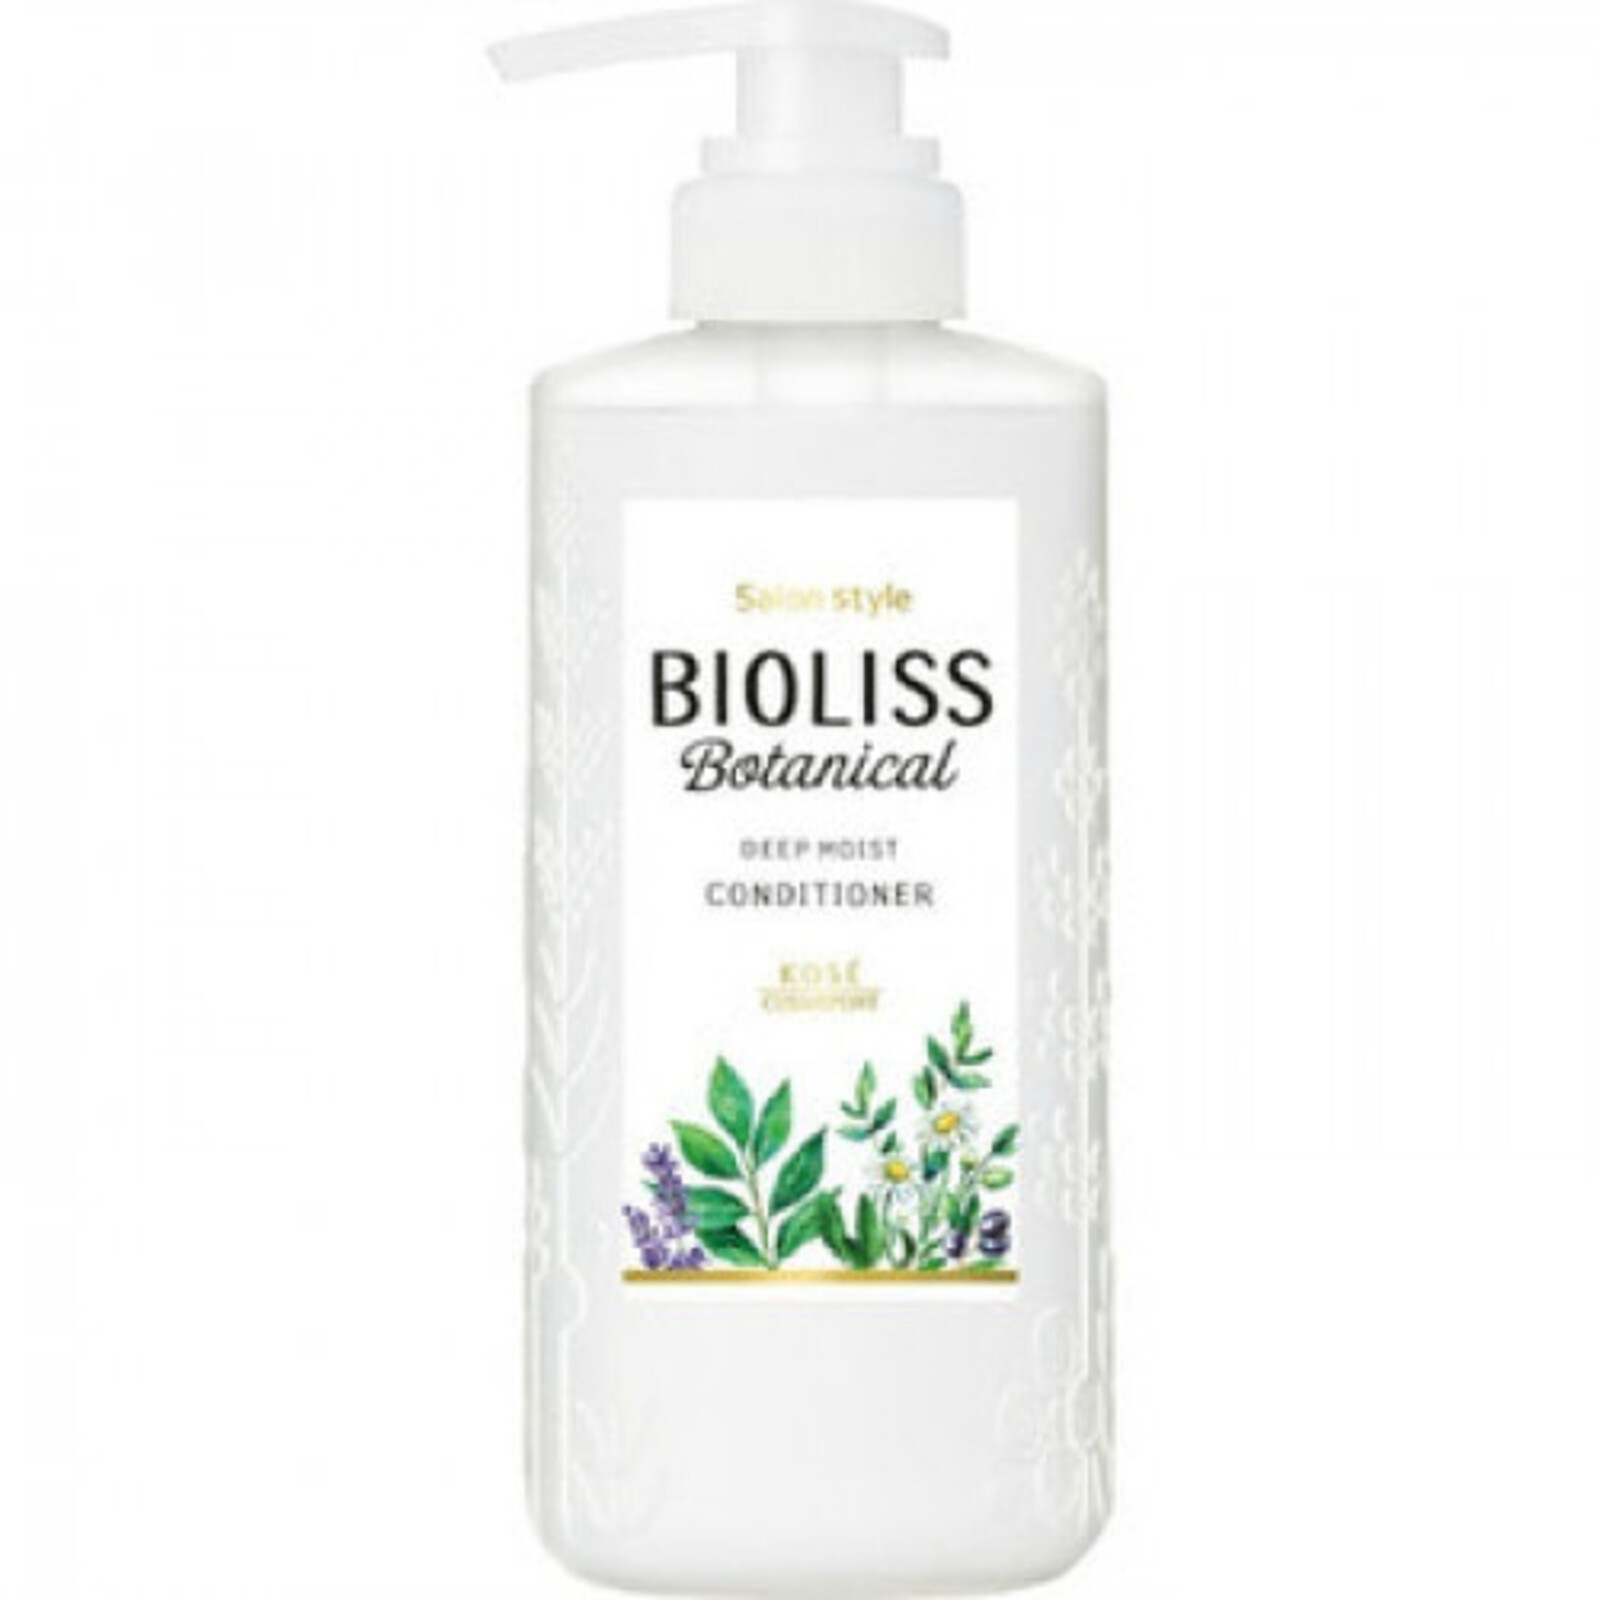 Bioliss botanical deep moist увлажняющий кондиционер для волос 480 мл